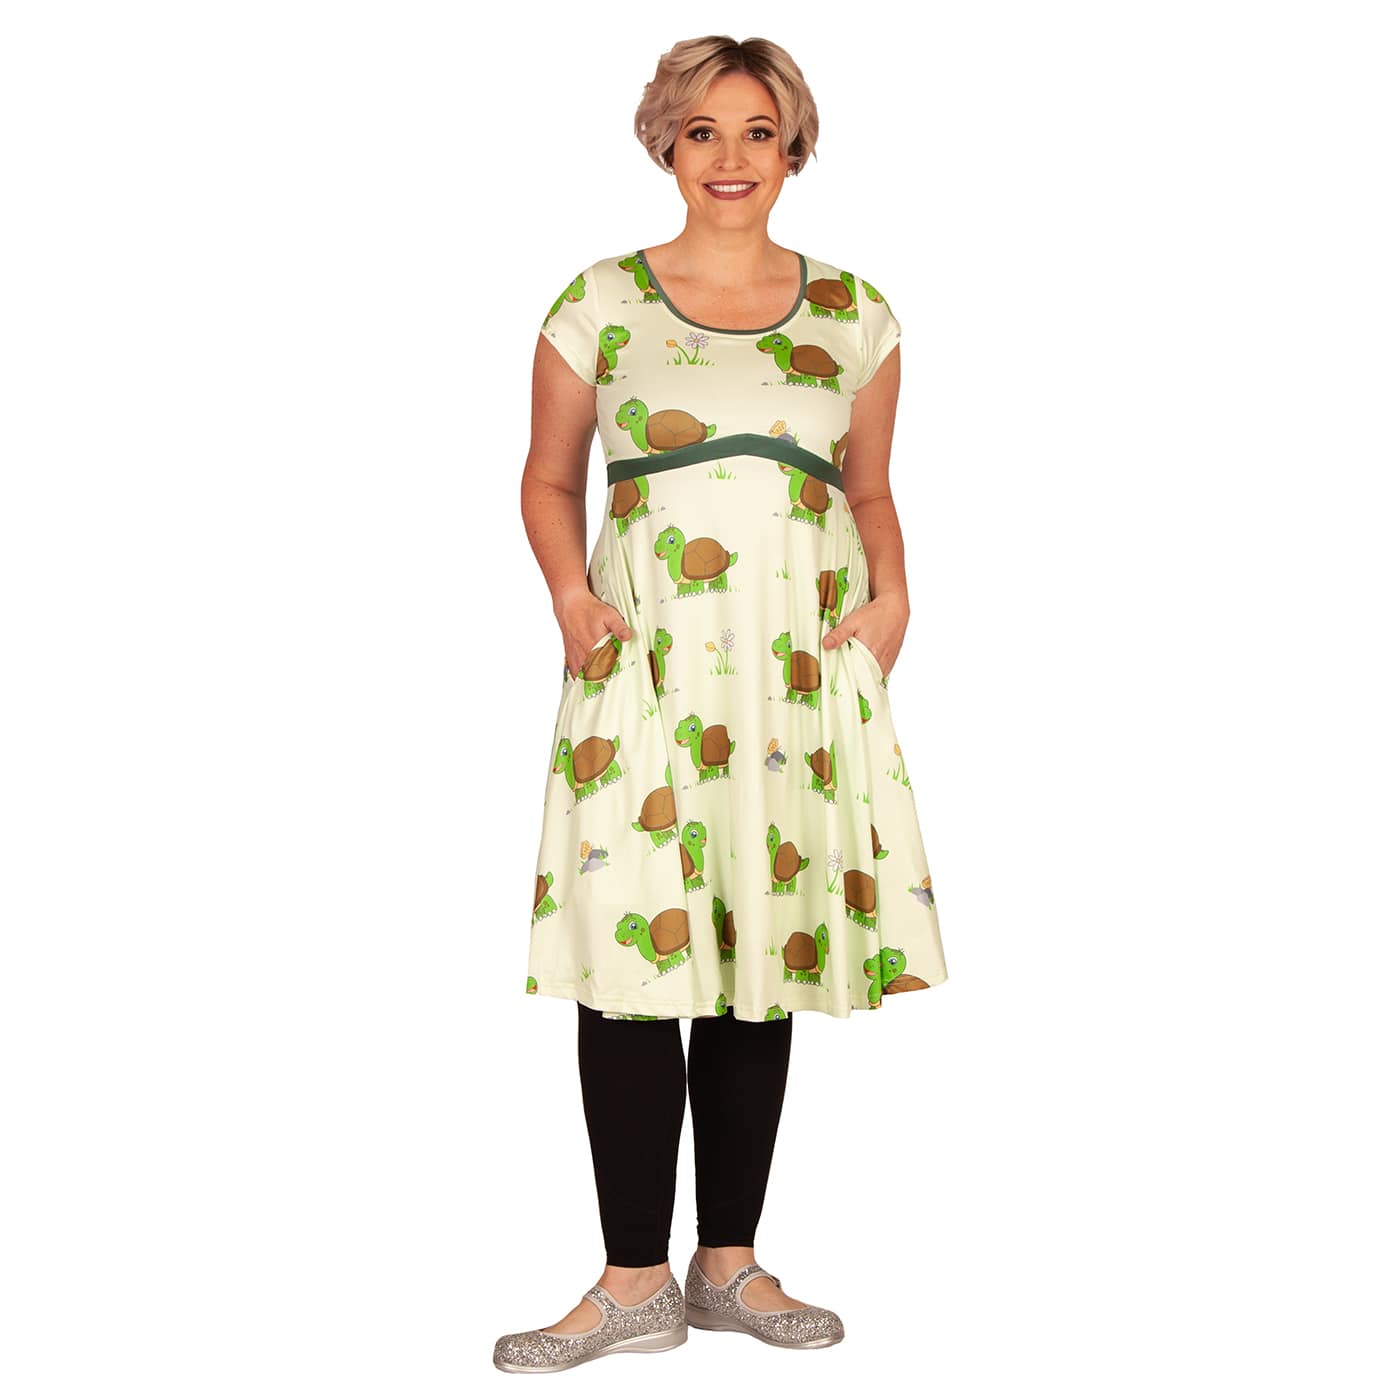 Wisdom Tea Dress by RainbowsAndFairies.com.au (Tortoise - Turtle - Animal Print - Dress With Pockets - Mod Retro - Vintage Inspired - Kitsch) - SKU: CL_TEADR_WISDO_ORG - Pic-02